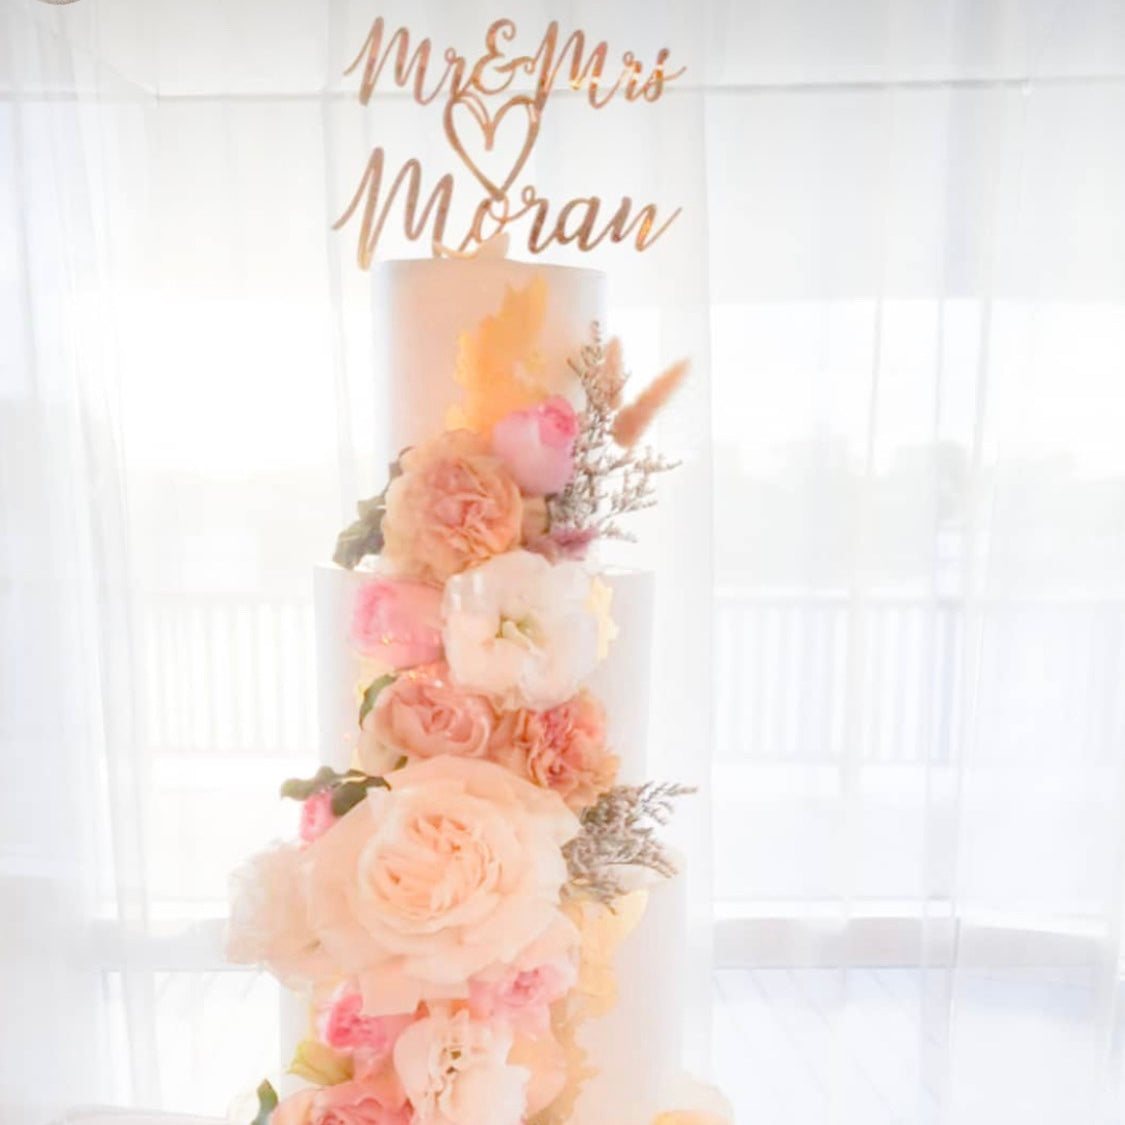 Mr & Mrs + Last Name Cake Topper